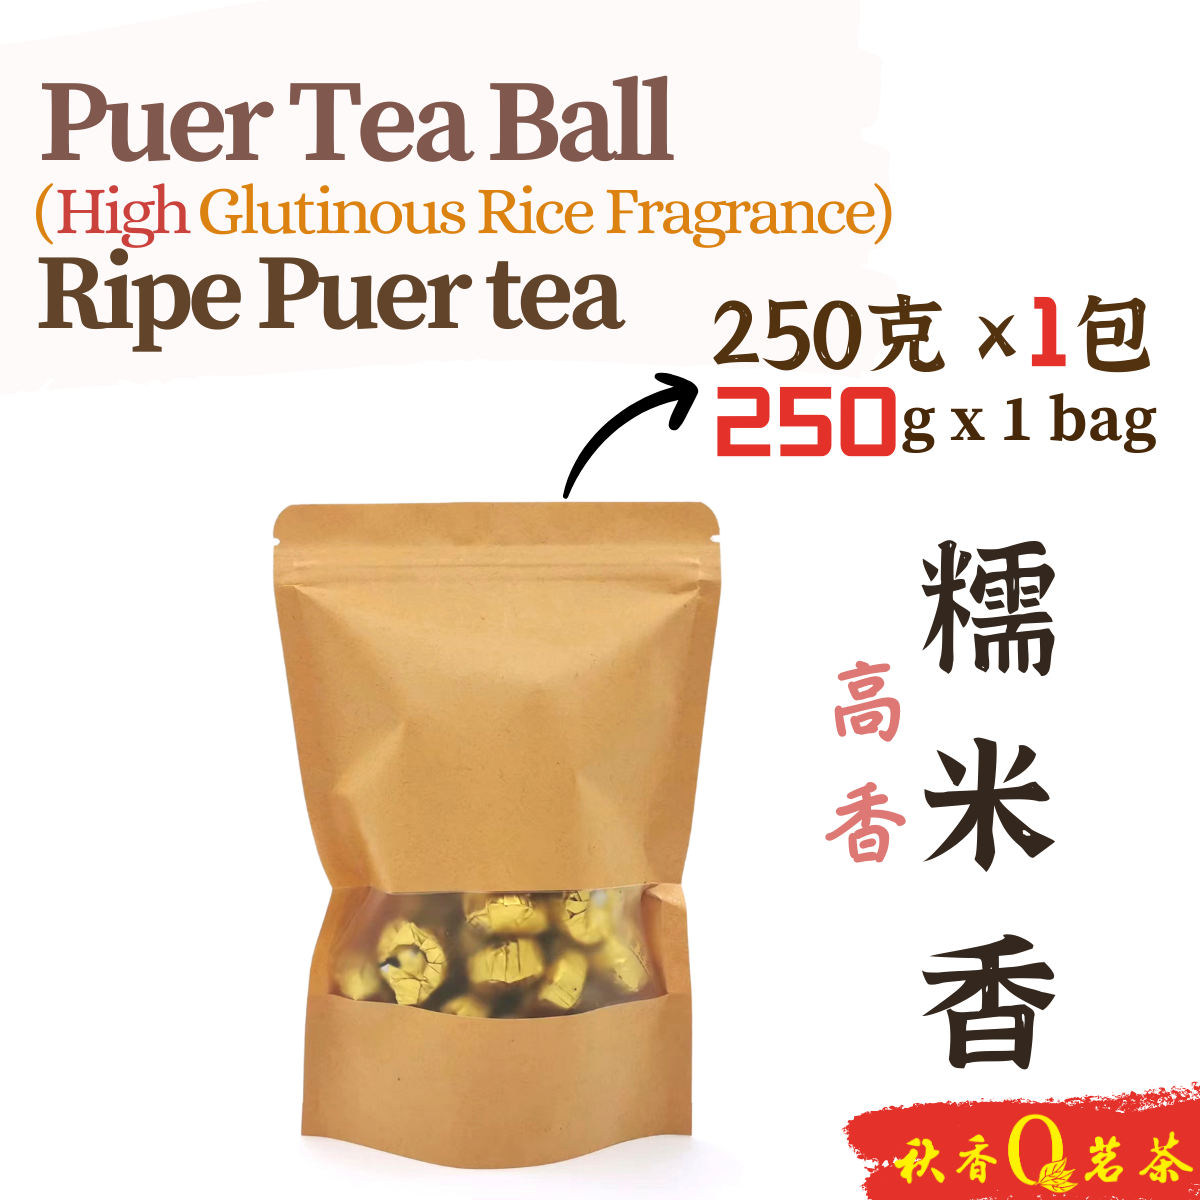 普洱茶 糯米沱 (高香) Puer Tea Ball (High Glutinous Rice Fragrance)【250g】|【调配茶 Blended tea】